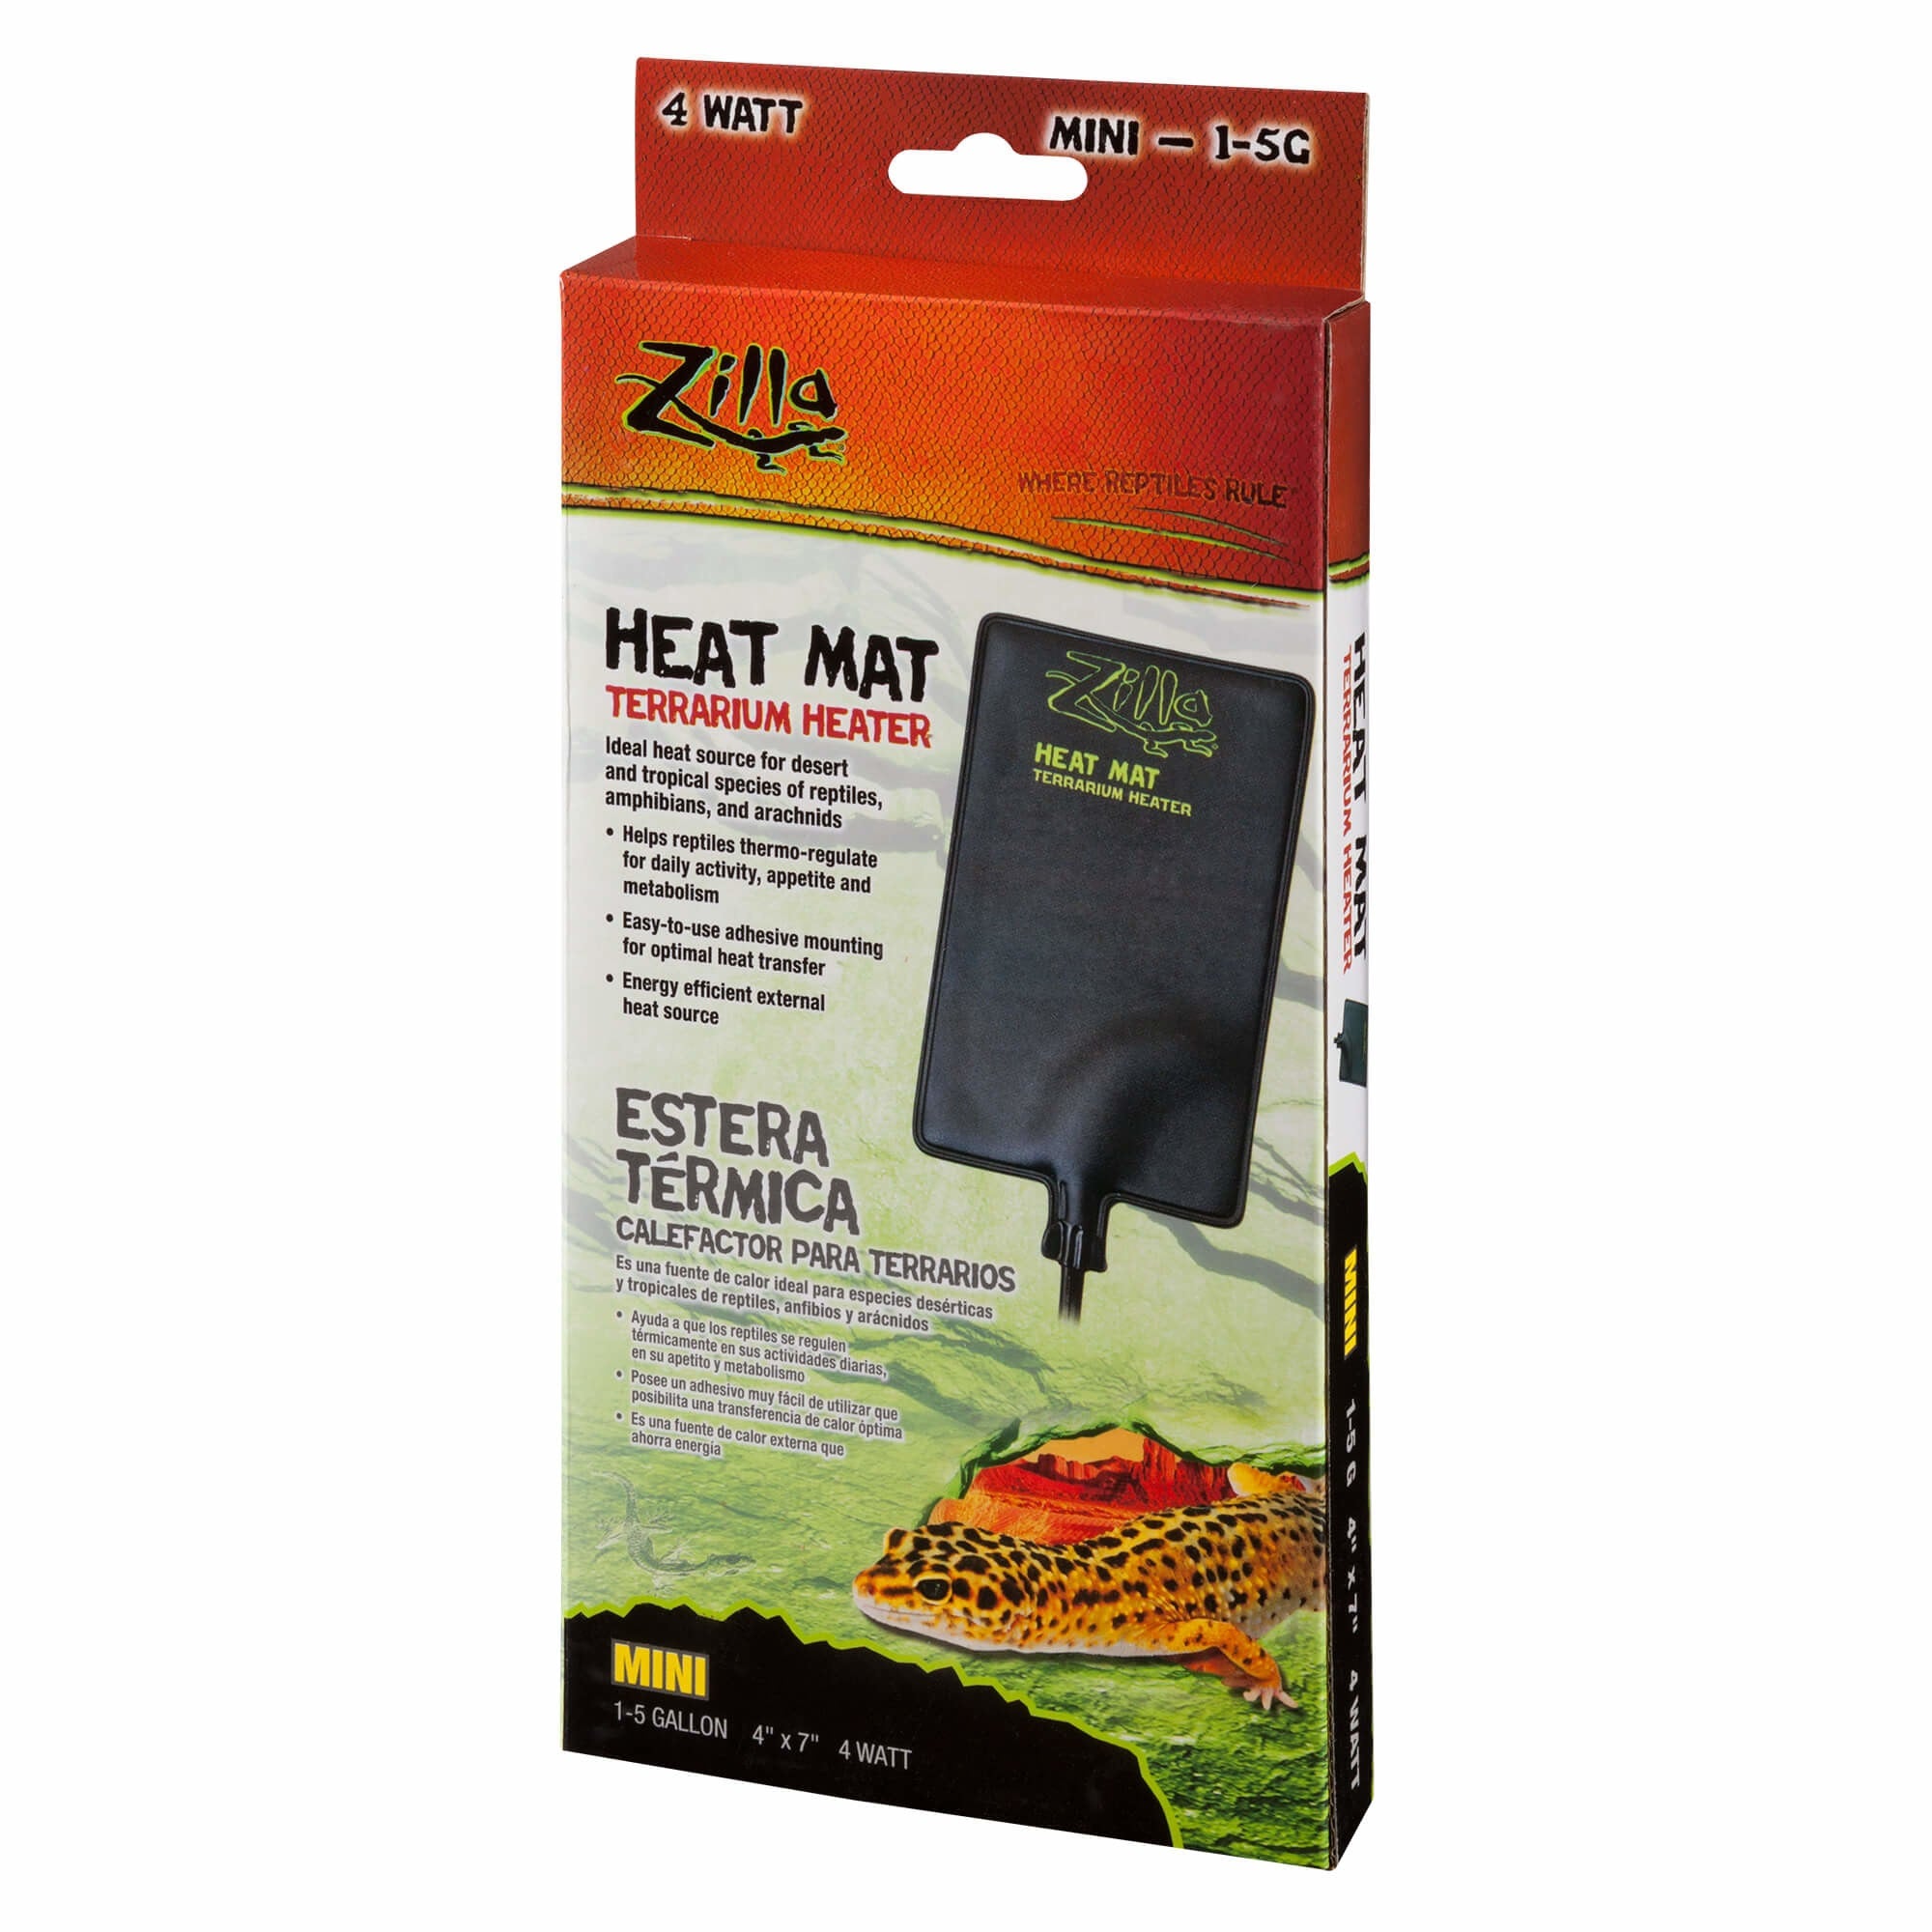 Zilla Heat Mat Terrarium Heater, Black, Mini, 1-5 Gallon, 4-Watt, 4 x 7 Inches